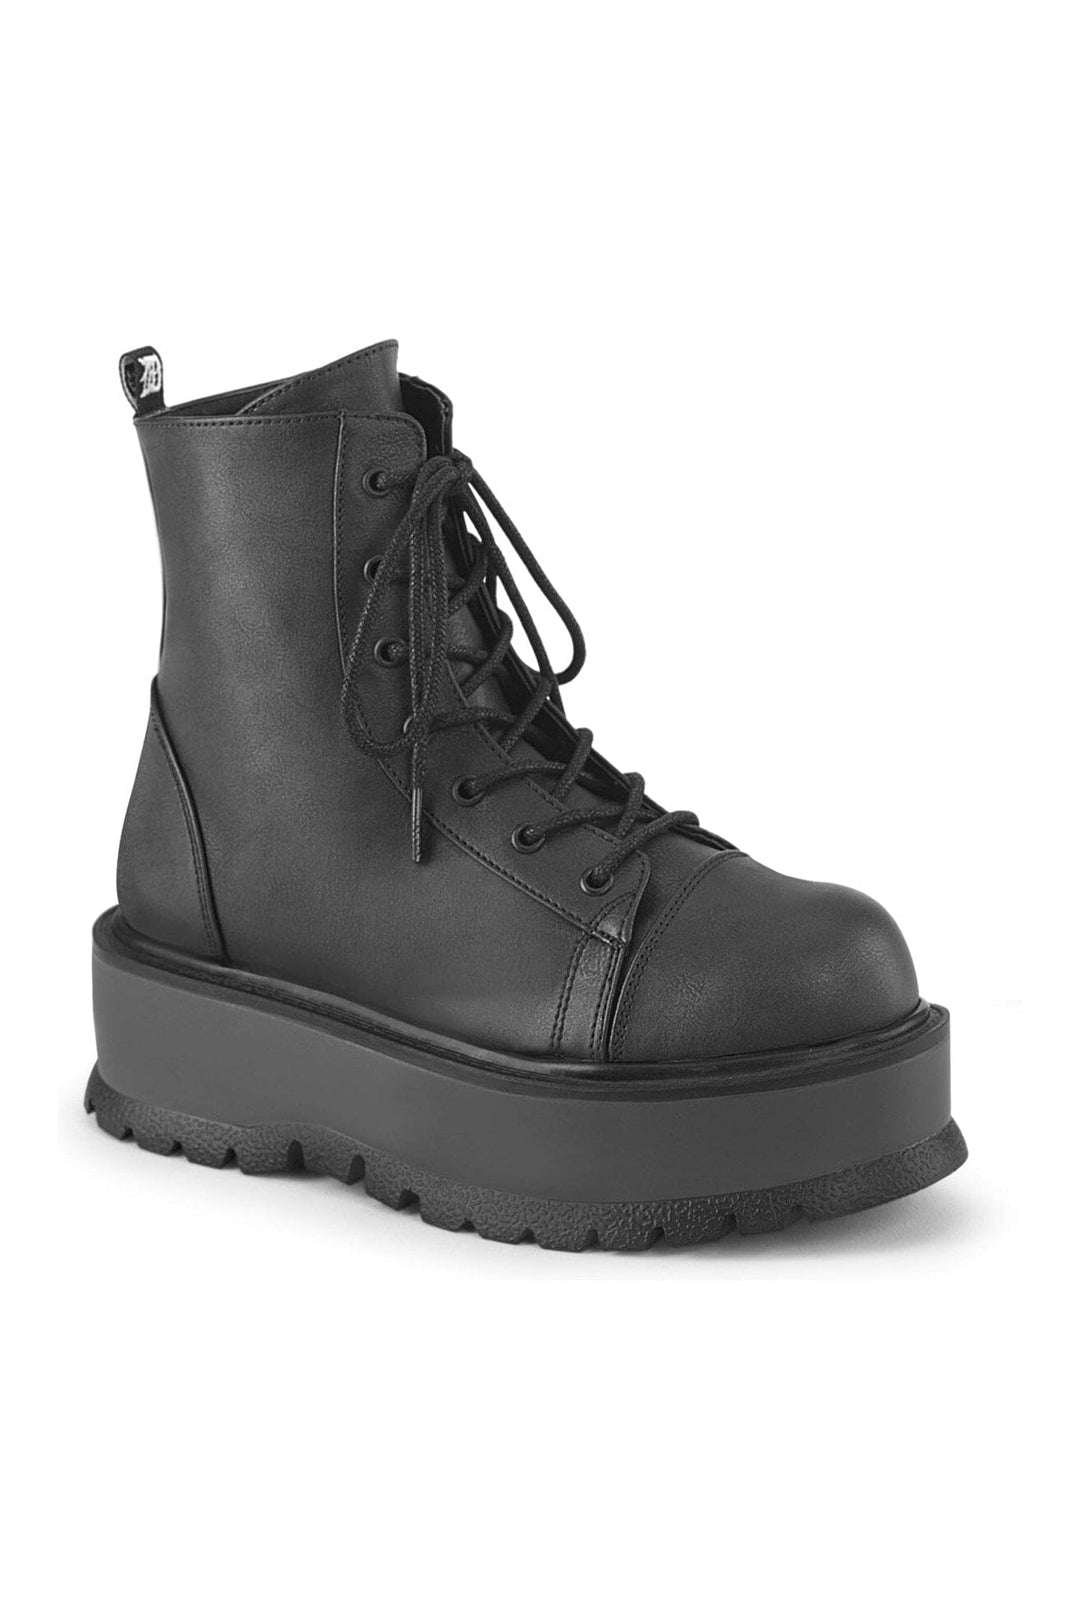 SLACKER-55 Black Vegan Leather Ankle Boot-Ankle Boots-Demonia-Black-10-Vegan Leather-SEXYSHOES.COM